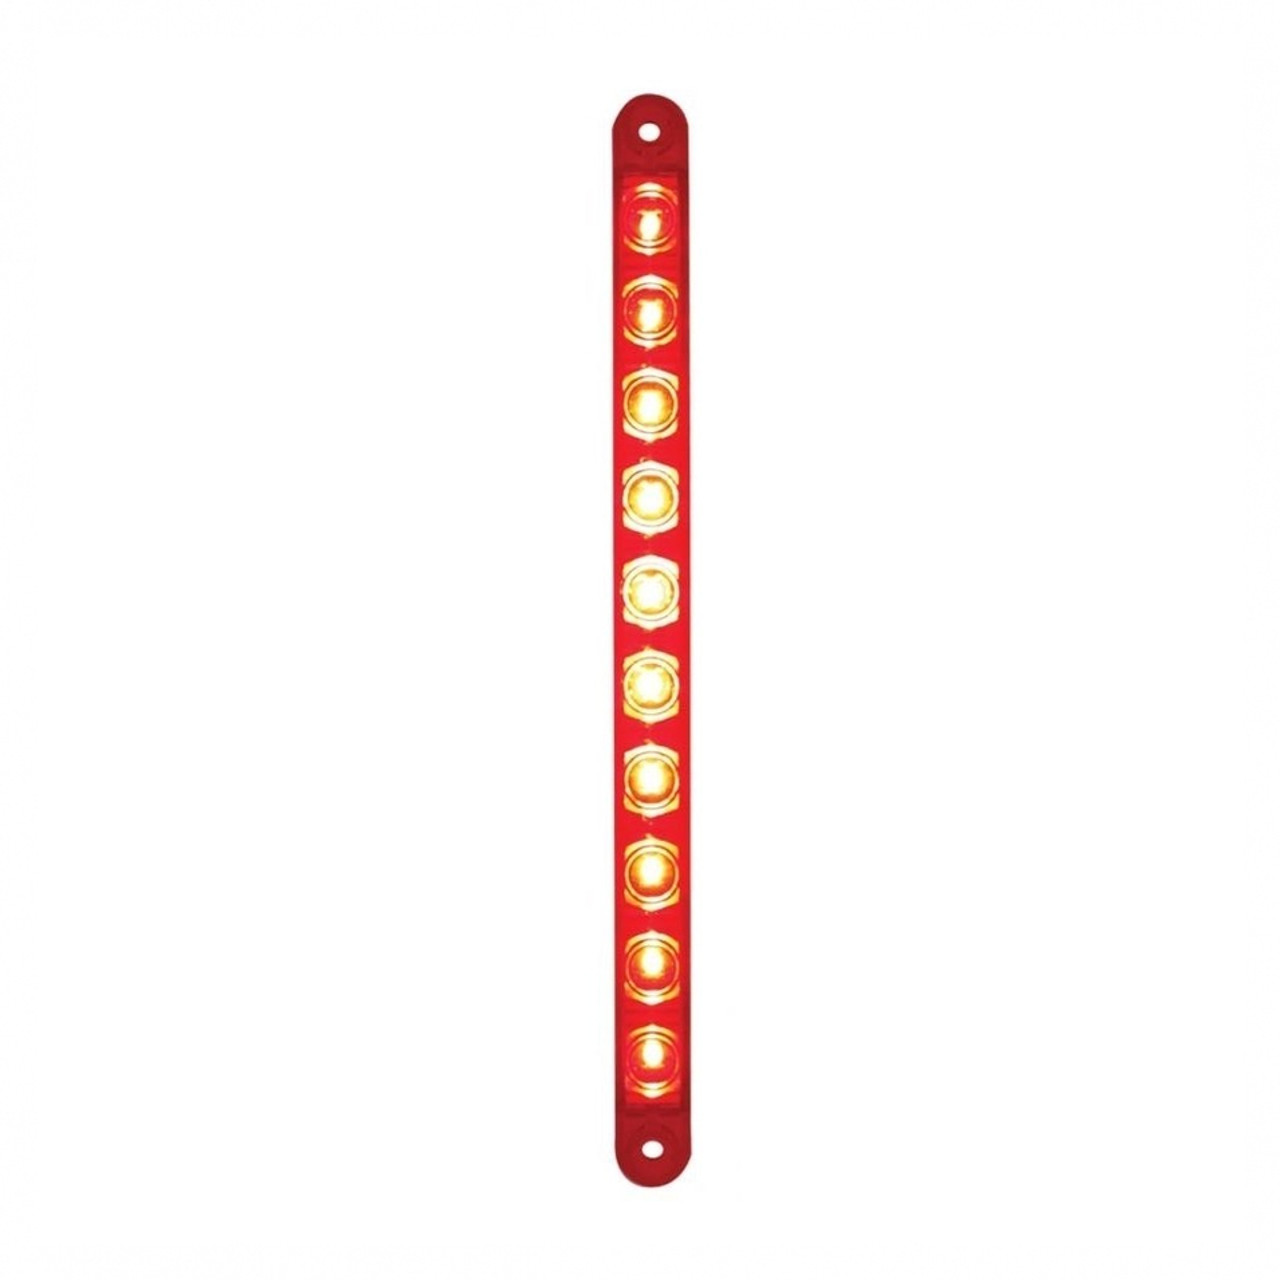 10 LED 9" Stop, Turn & Tail Light Bar Only - Red LED/Red Lens